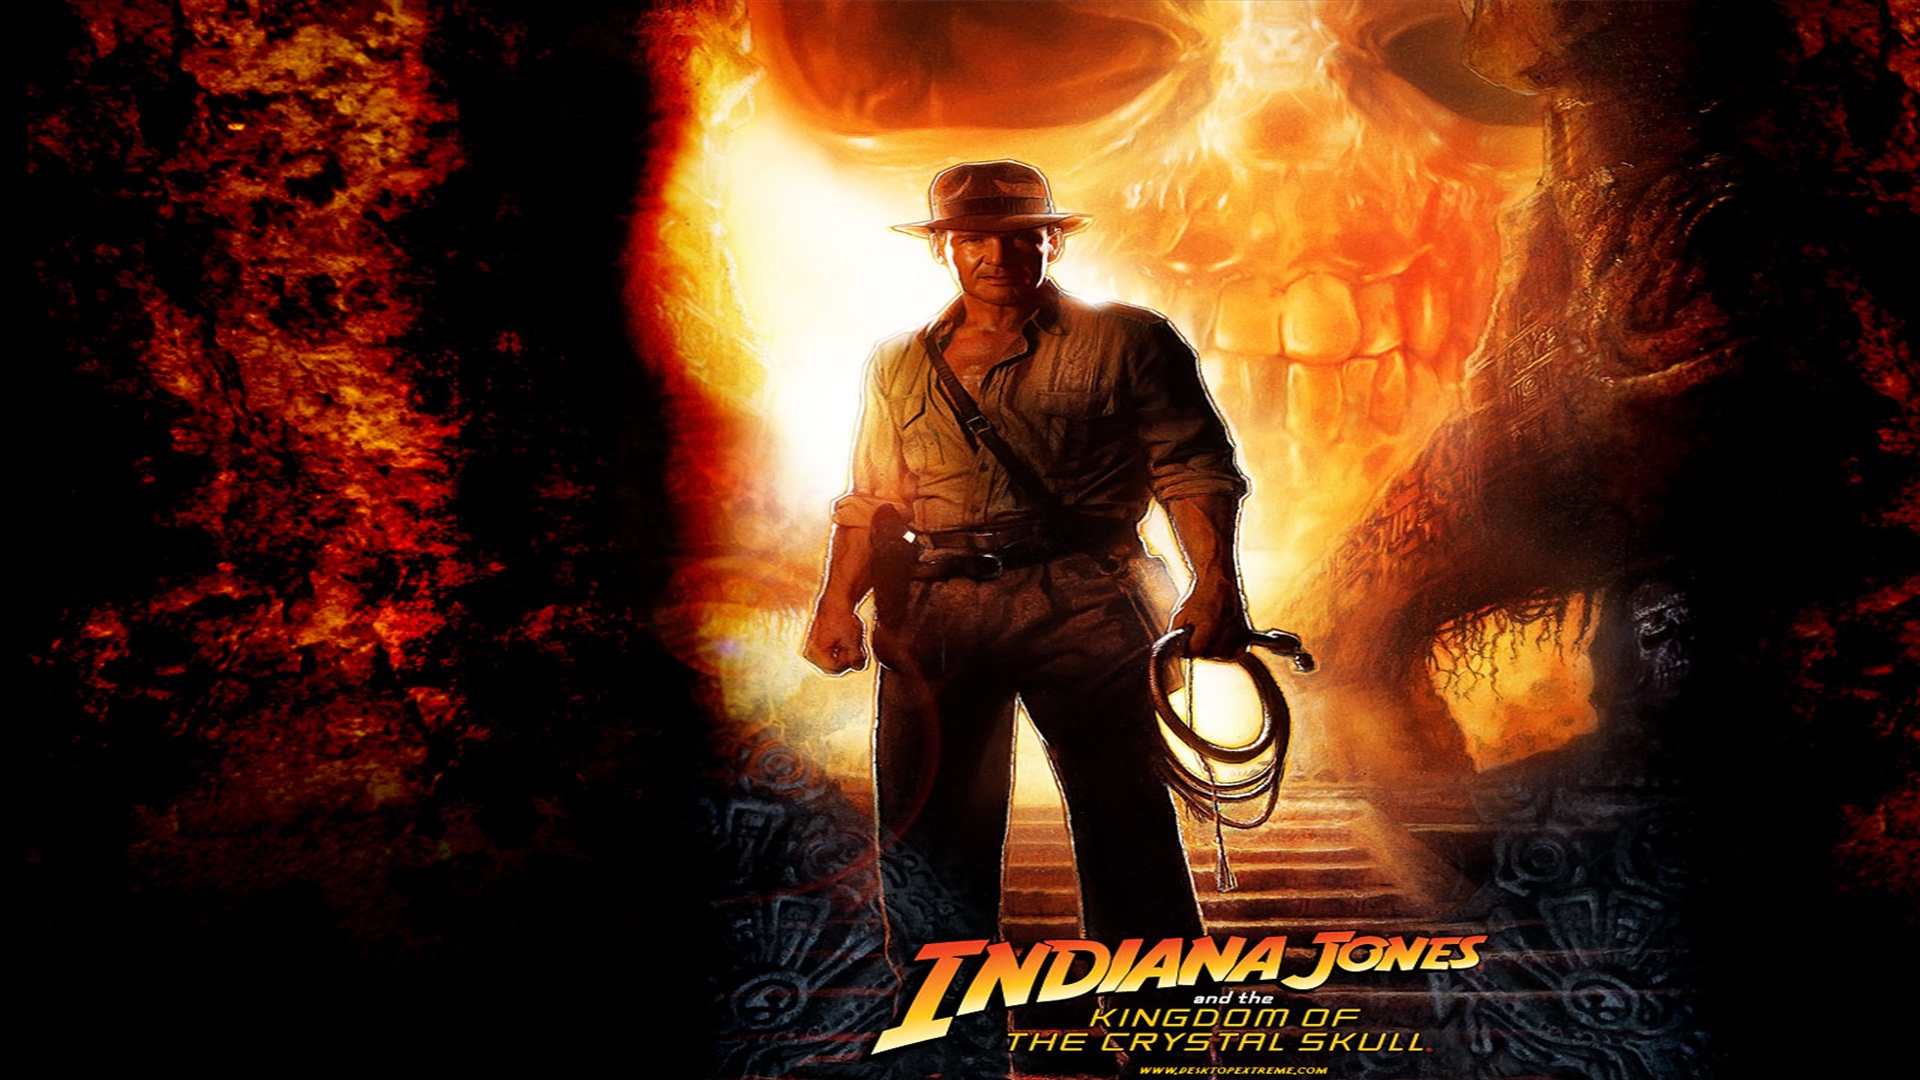 Movie Indiana Jones Wallpaper 1920x1080 Movie Indiana Jones